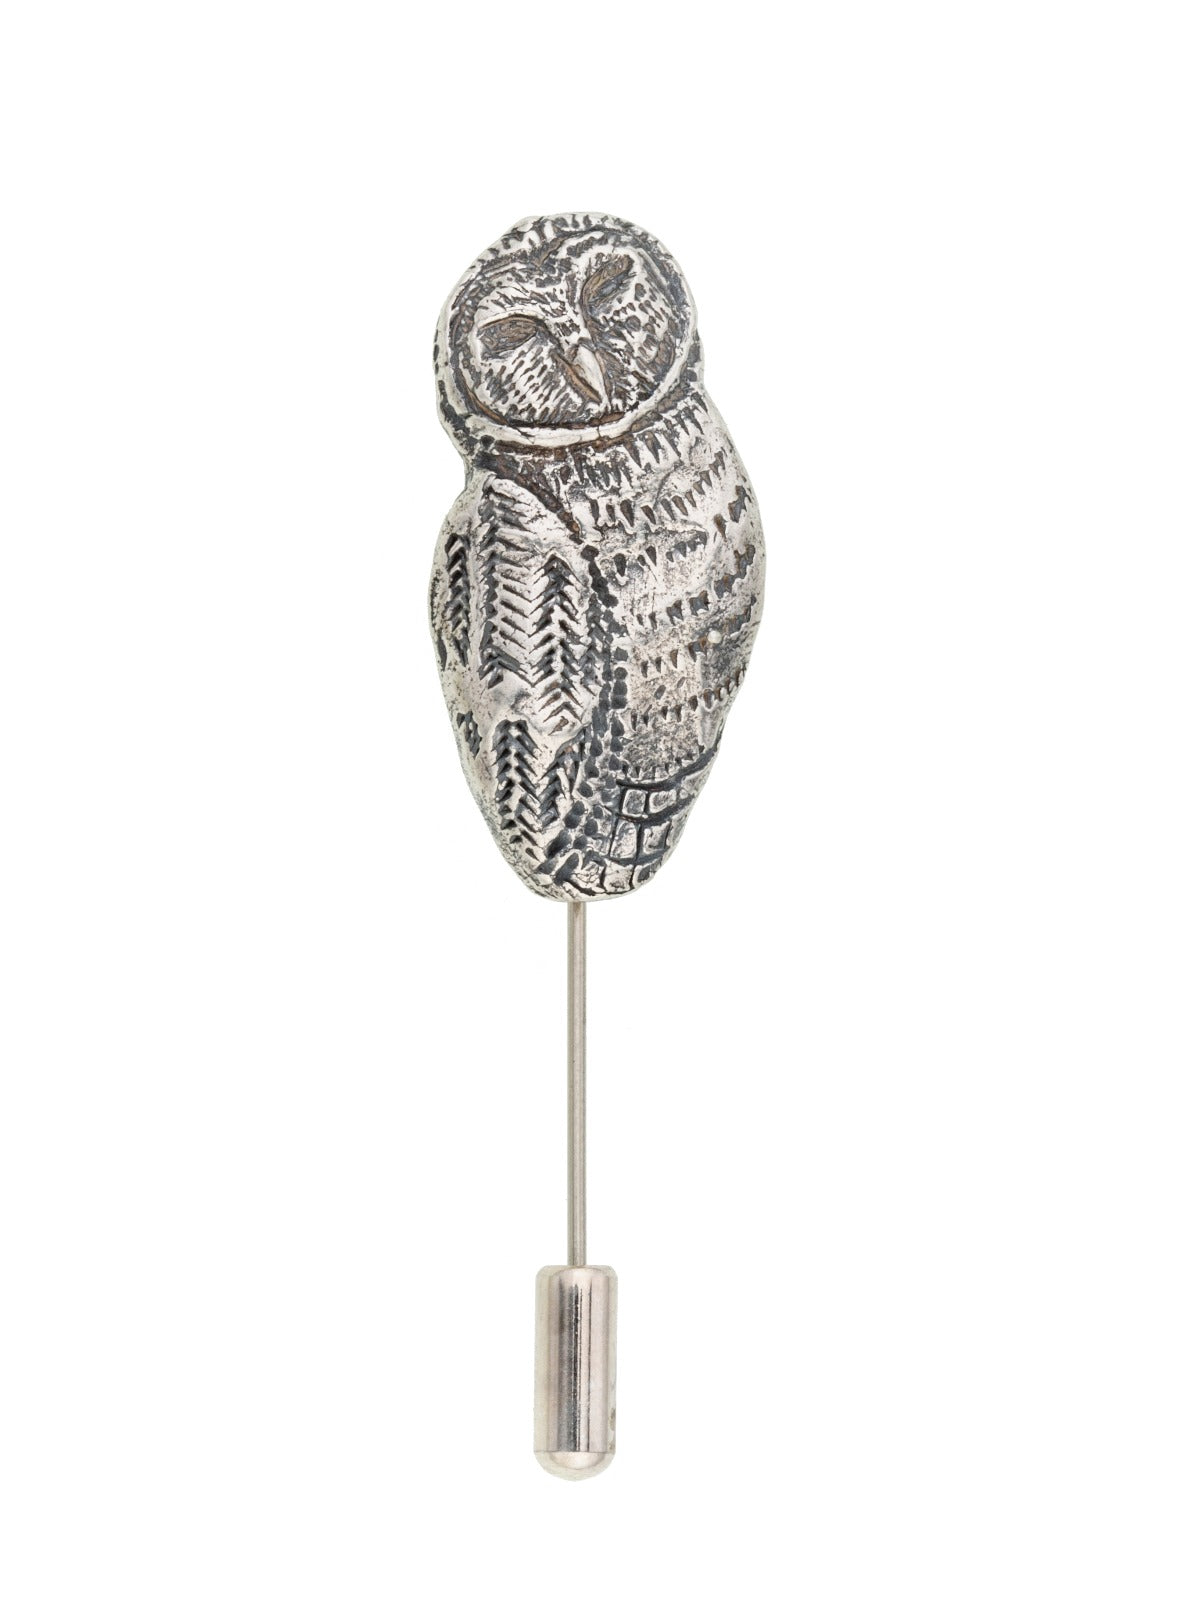 Owl Hat/Lapel Pin